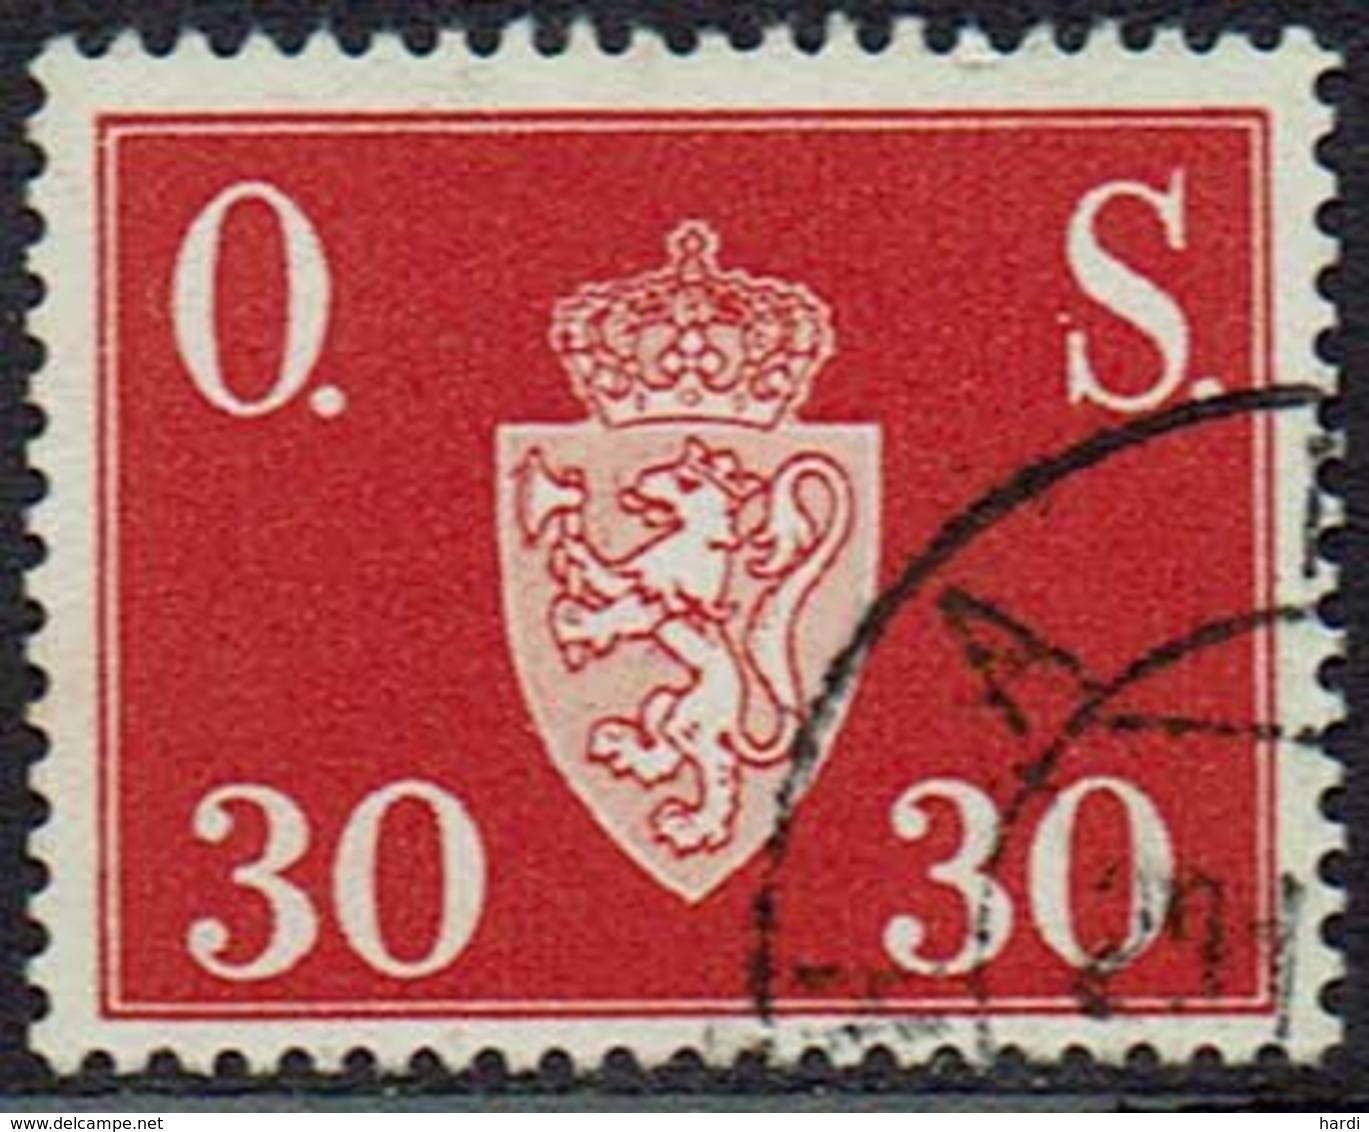 Norwegen DM, 1951, MiNr 64, Gestempelt - Oficiales